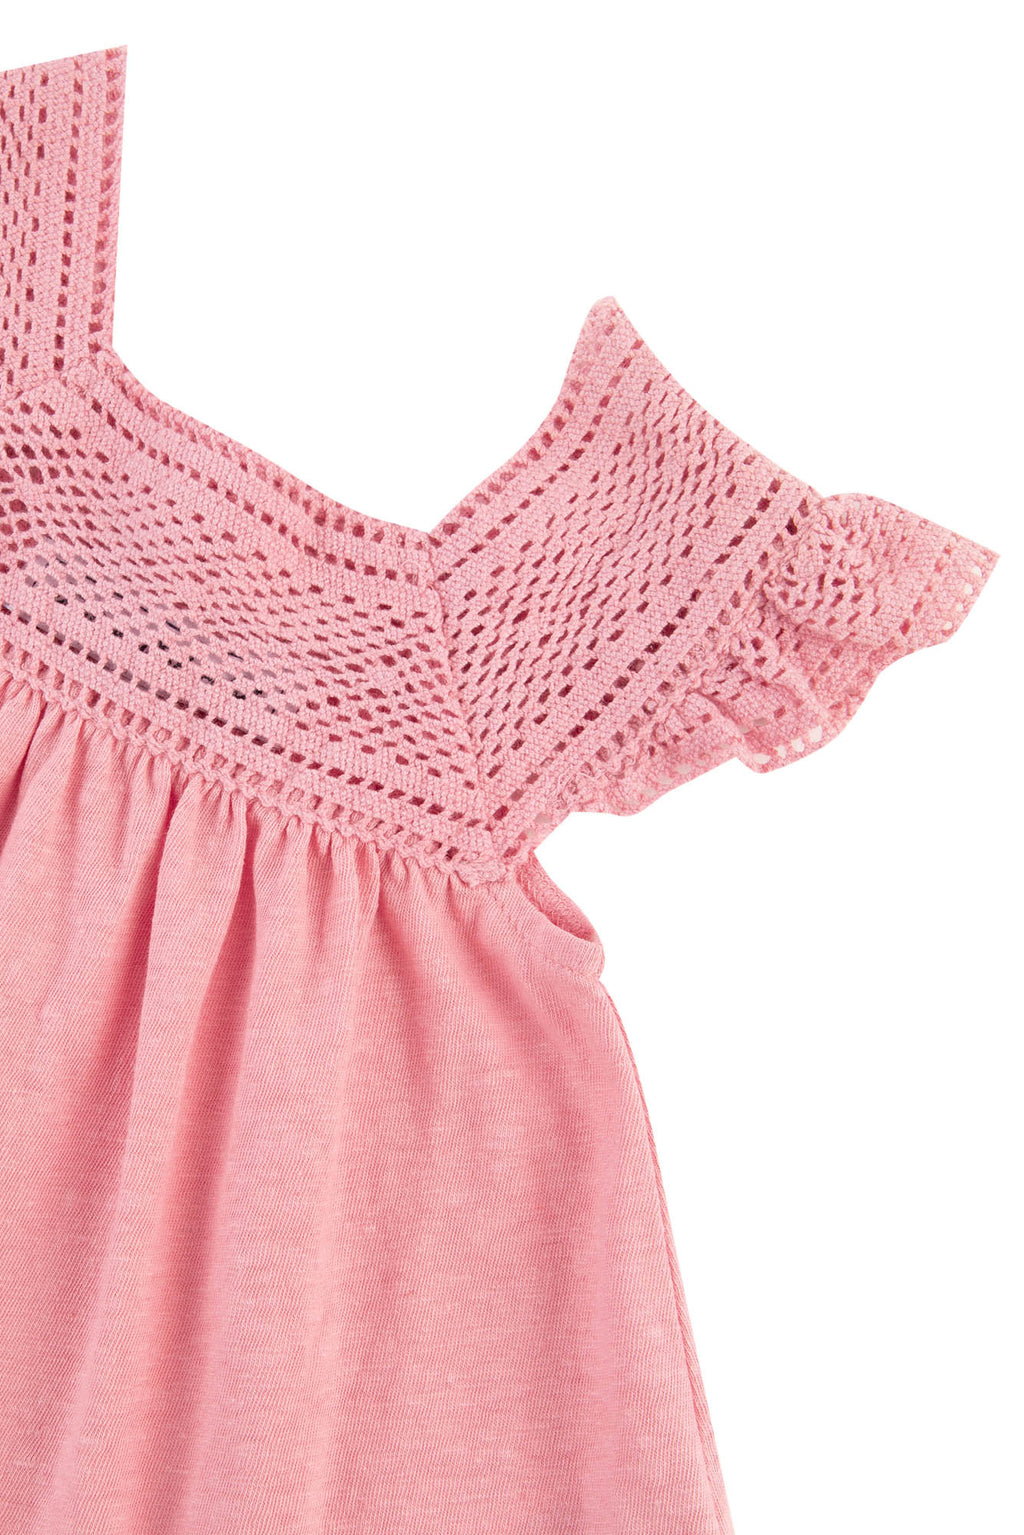 Robe - Rose crochet coton